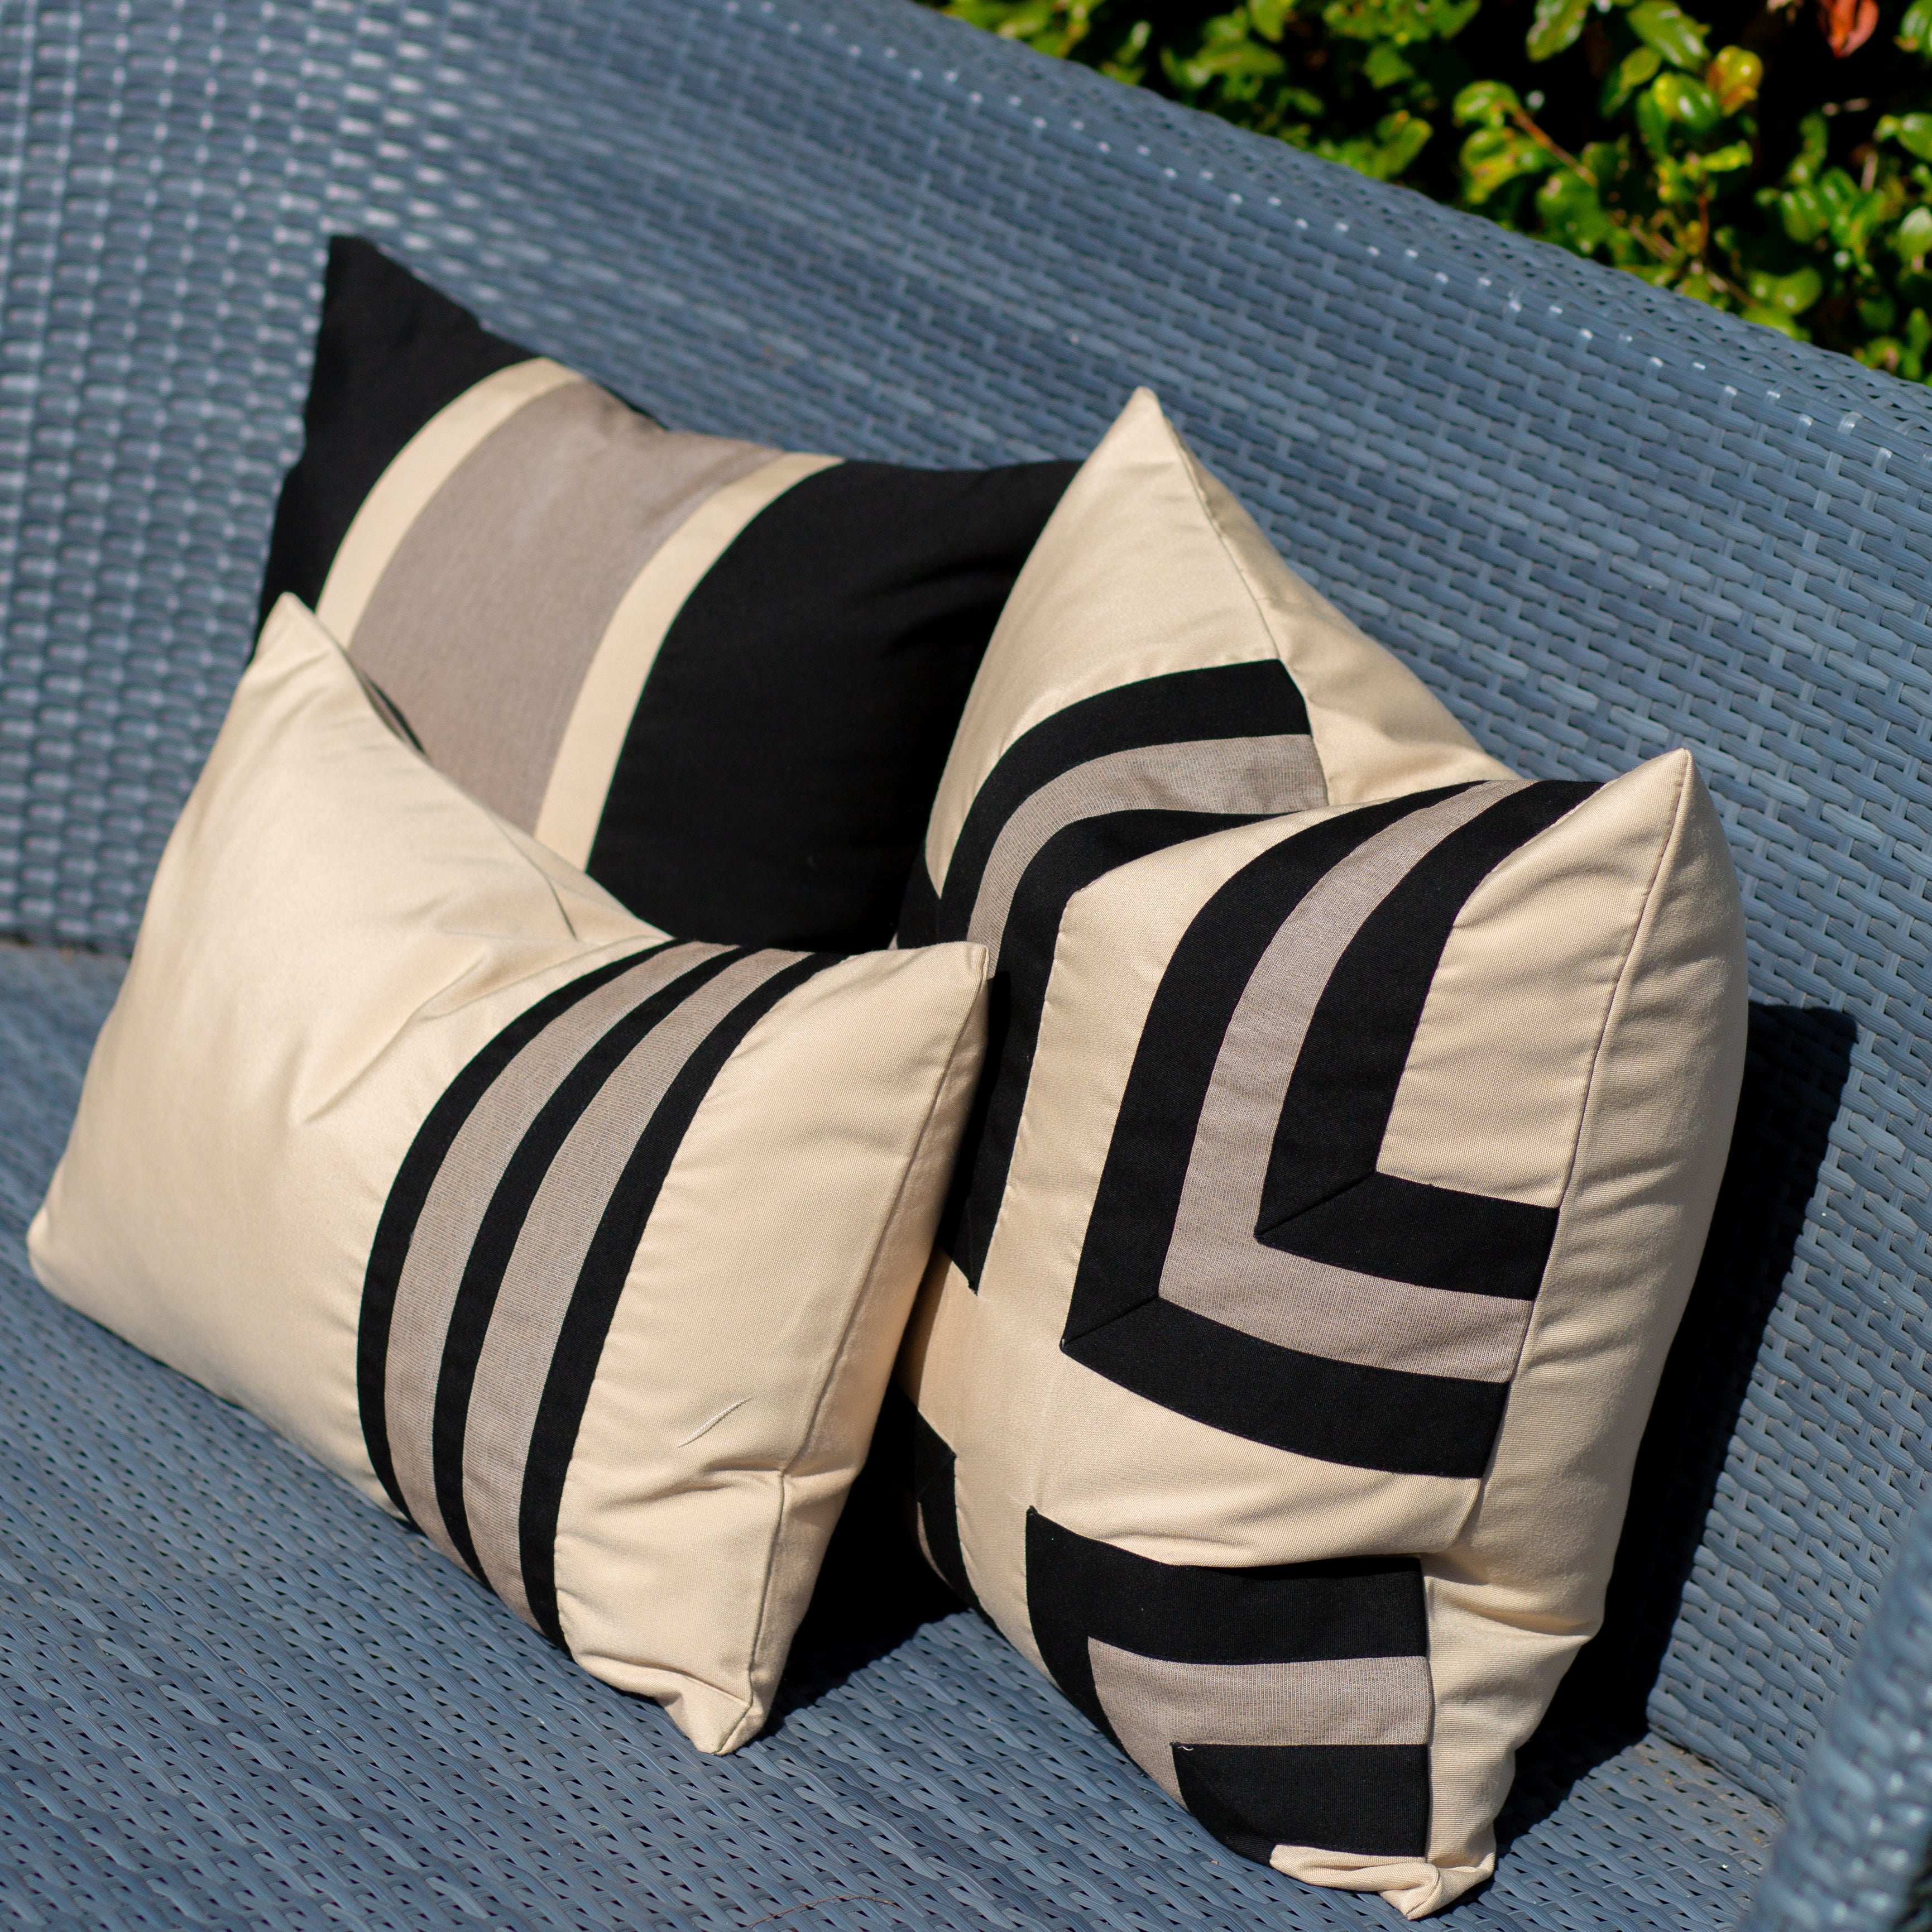 Bandhini - Design House Outdoor Outdoor Regent Cross Lounge Cushion 55 x 55cm